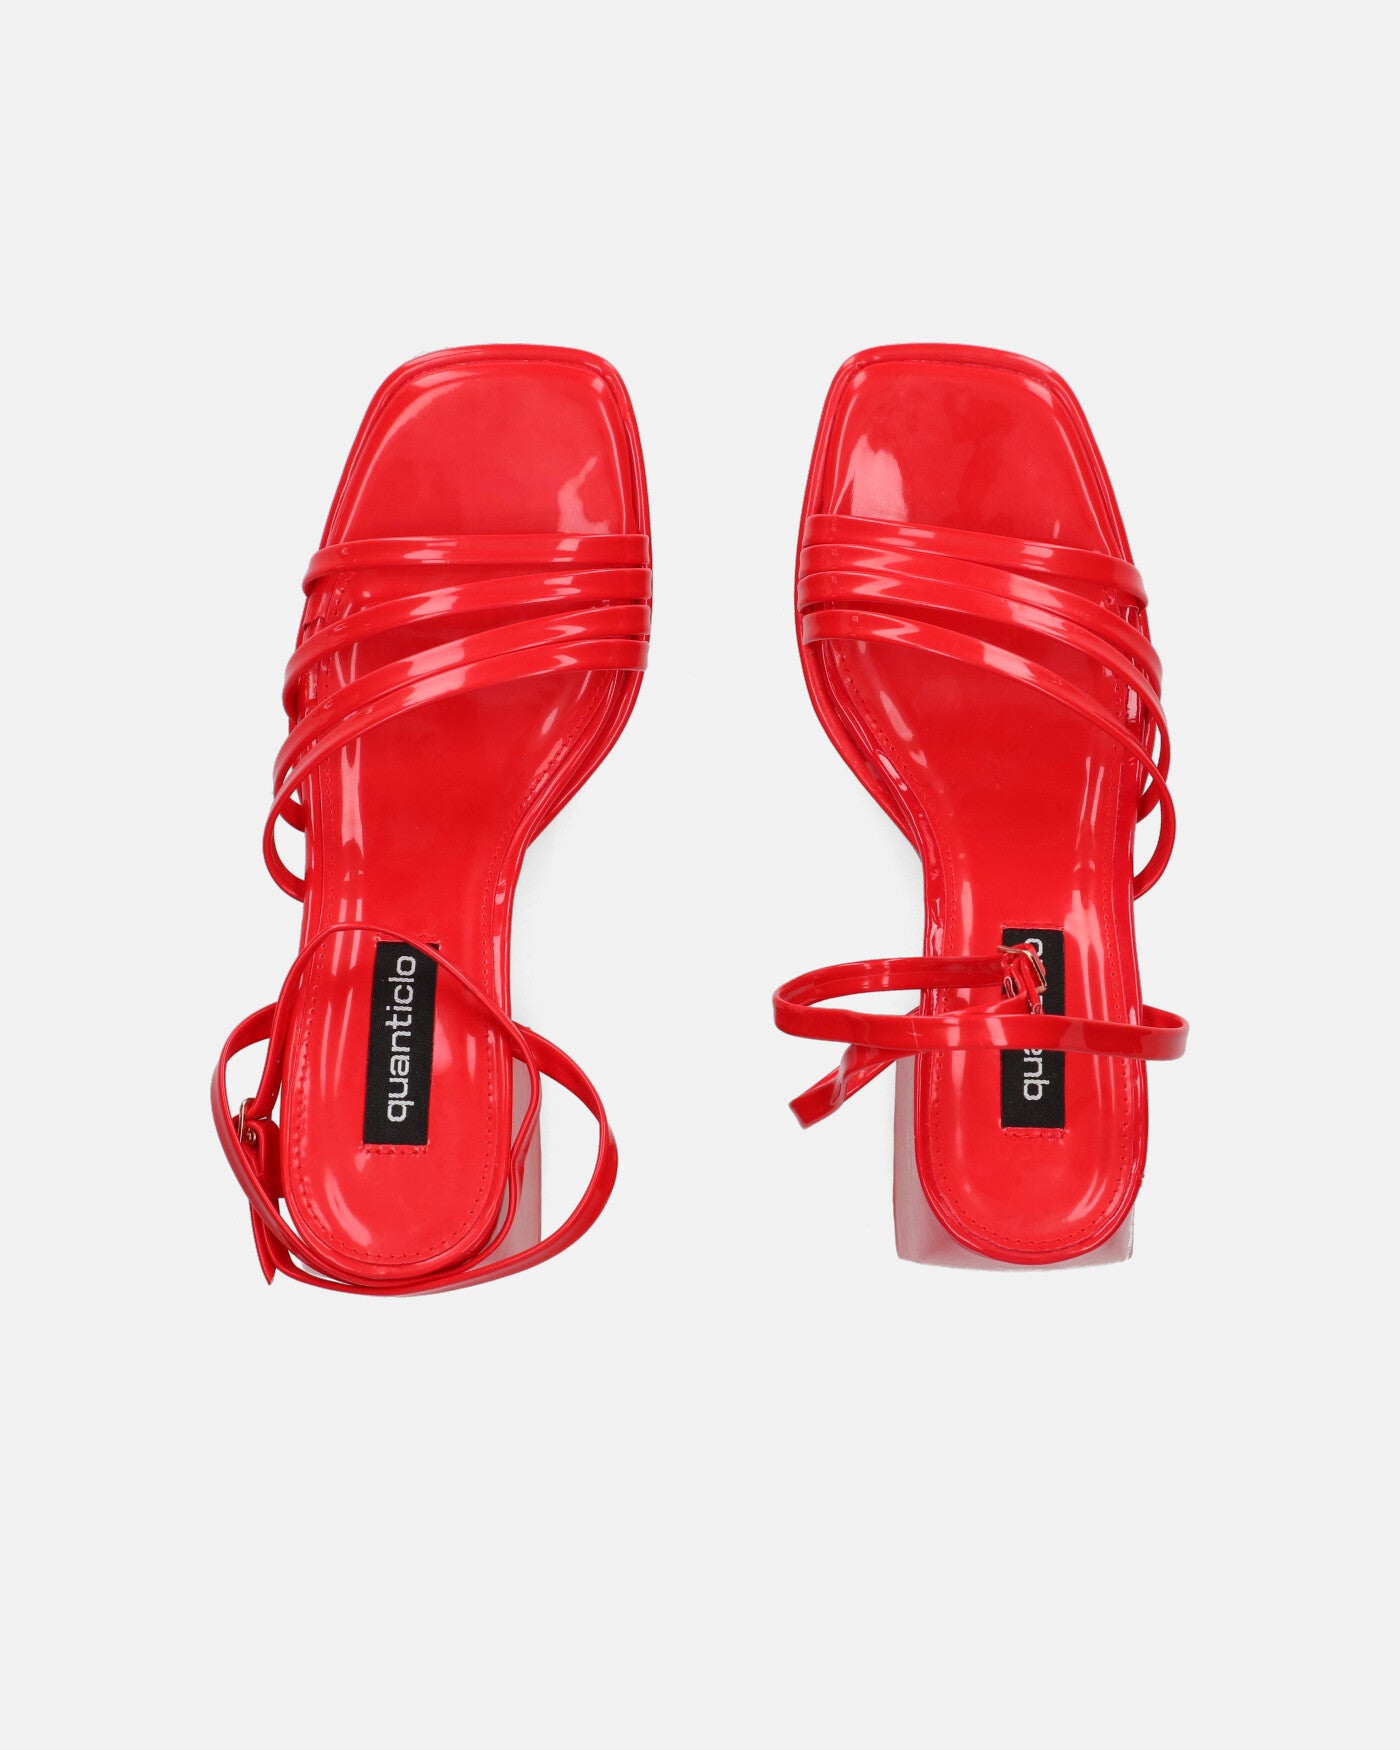 WINONA - sandalias glassy rojo con tacón cuadrado